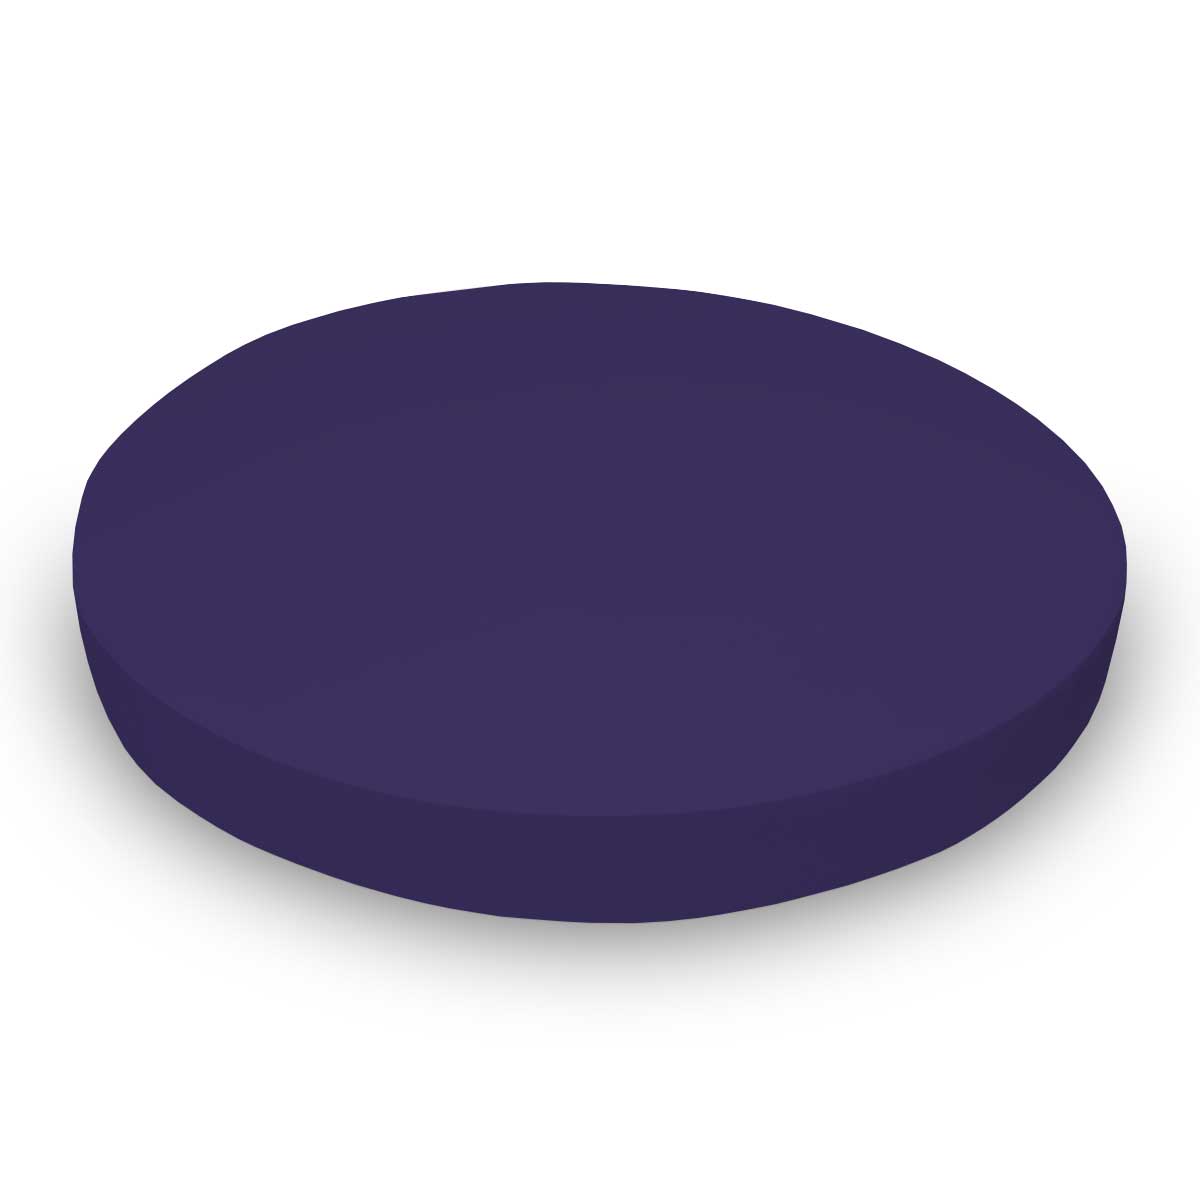 Oval (Stokke Mini) - Purple Jersey Knit - Fitted  Oval